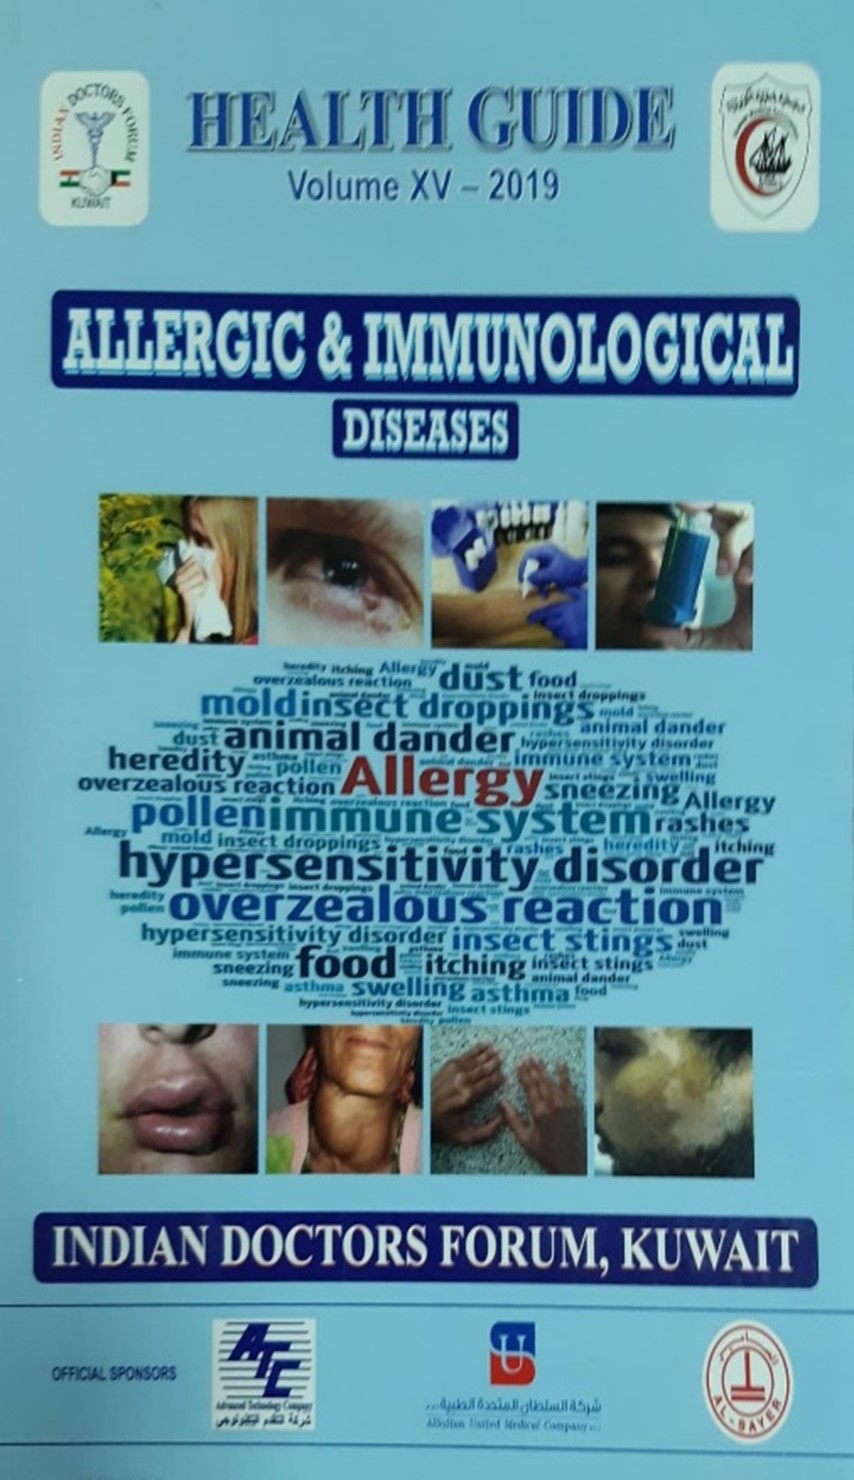 IDF HG 2019 - Allergic & Immunological Diseases